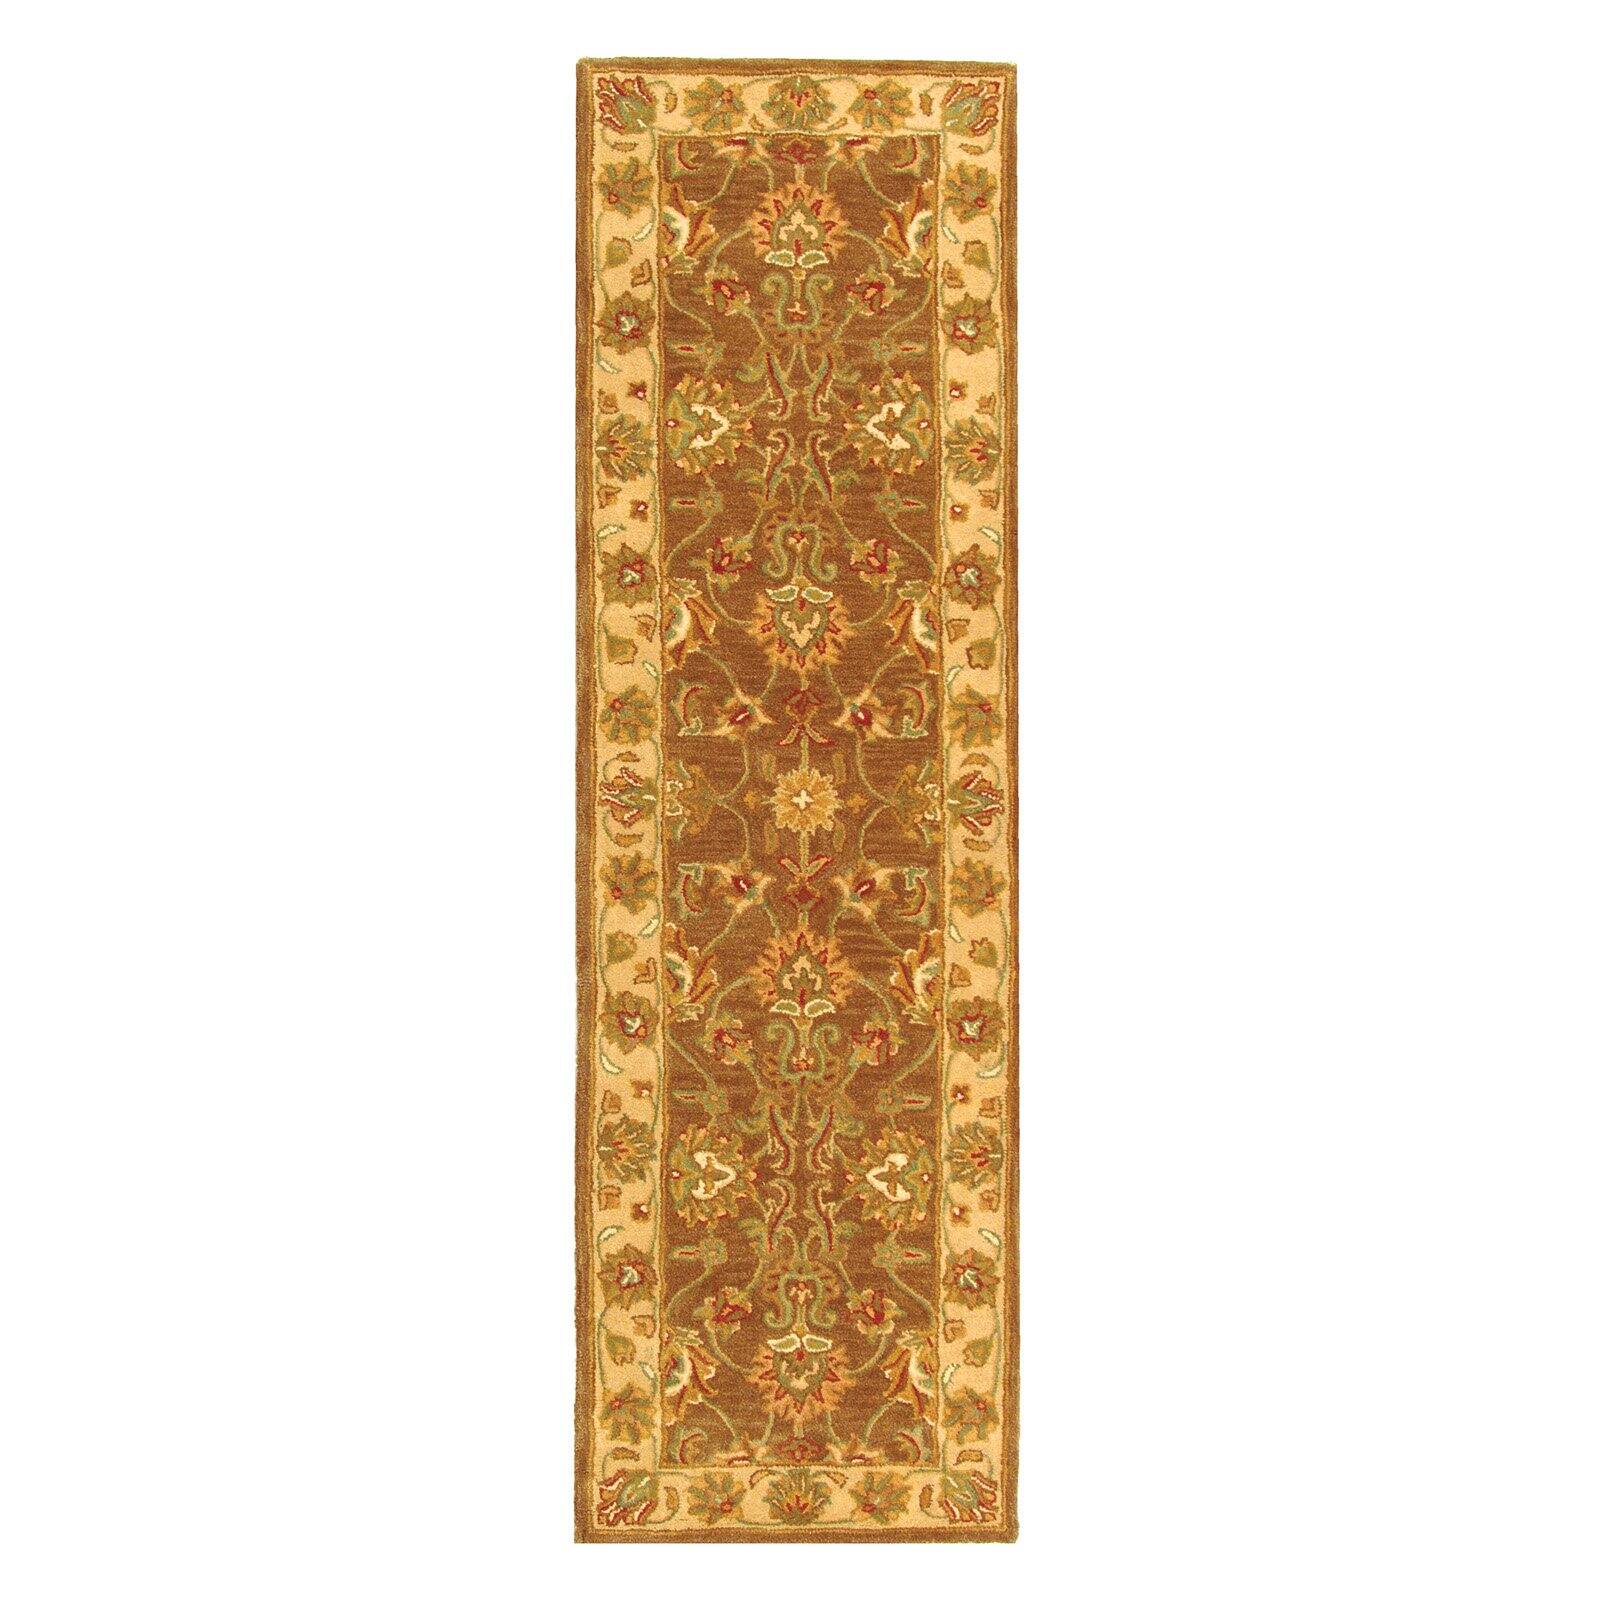 SAFAVIEH Heritage Regis Traditional Wool Area Rug, Brown/Ivory, 8'3" x 11' - image 3 of 9